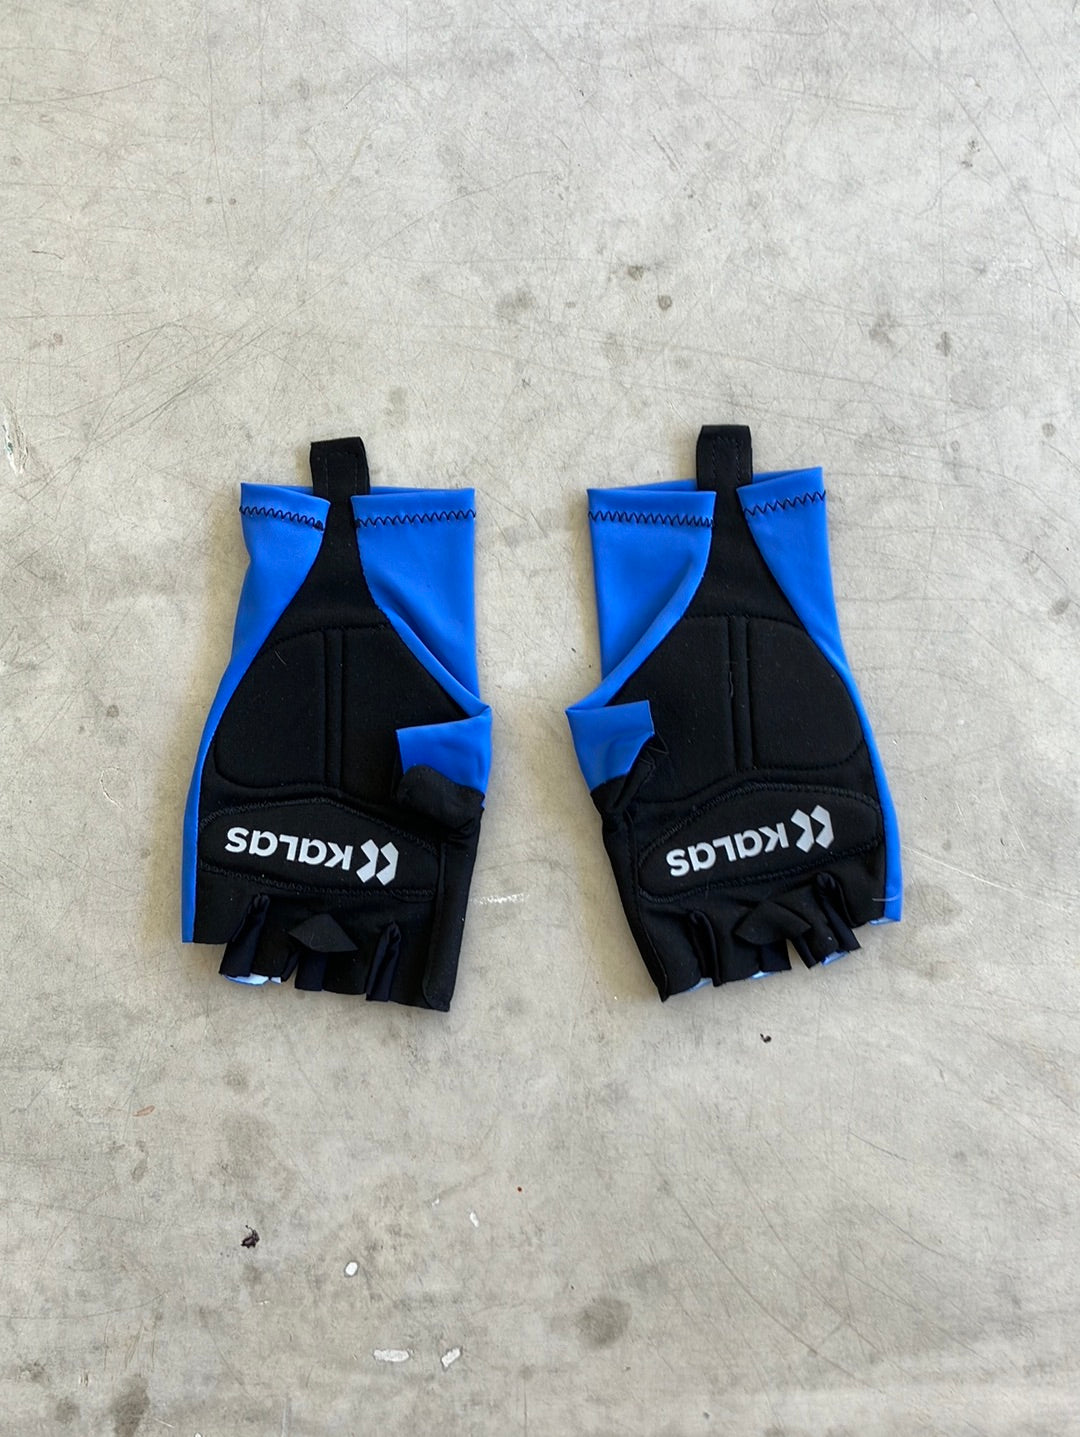 Gloves -  Cycling Short Finger Mitts | Kalas | Alpecin Deceuninck | Pro Cycling Kit